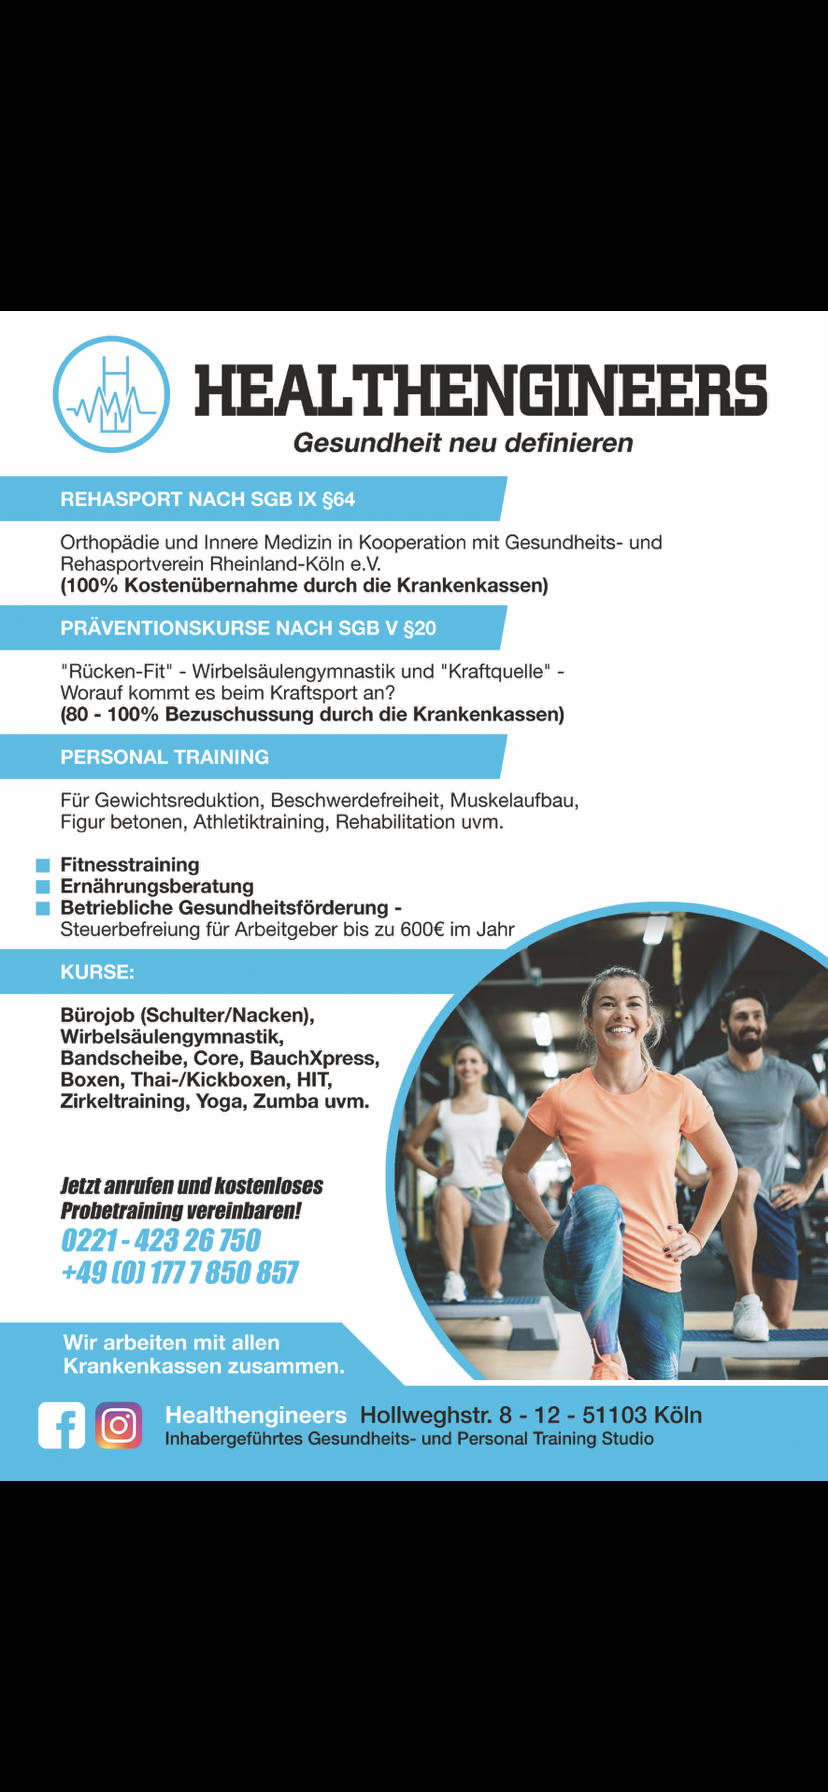 Healthengineers - Personal Fitness Training, Rehabilitationssport, Onlinekurs, Prävention, Hollweghstraße 8-12 in Köln